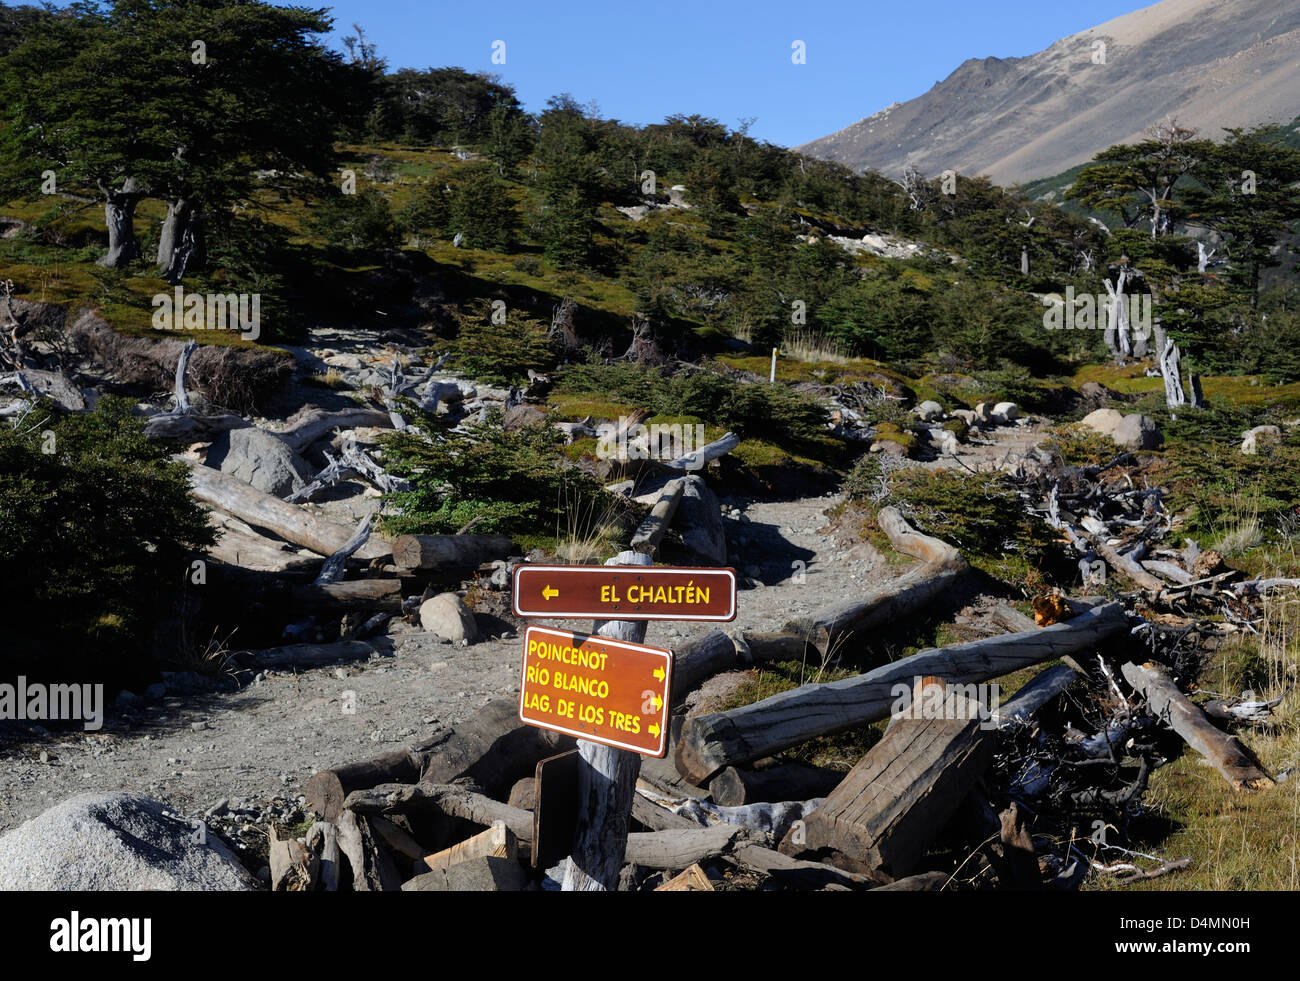 Signs on a path in Los Glaciares National Park pointing to El Chalten and Poincenot, Rio Blanco, Lago de les Tres Stock Photo